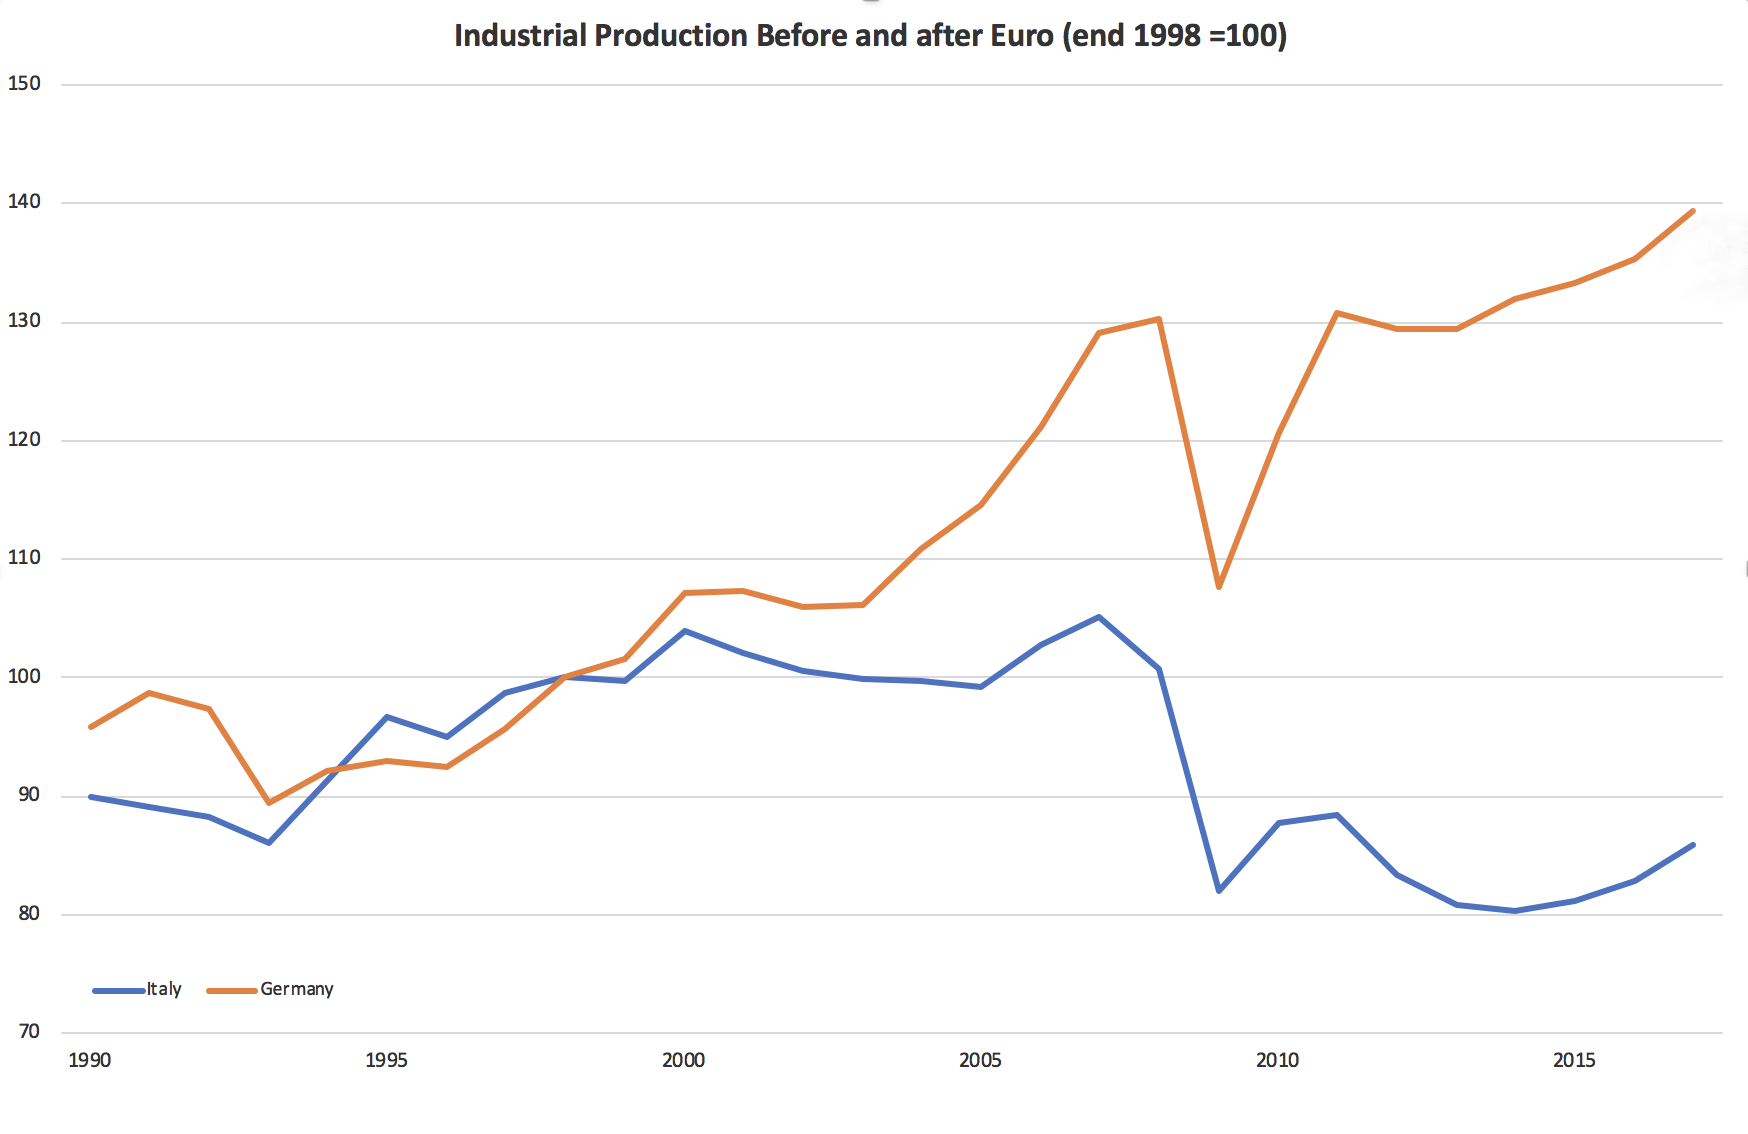 Industrial Production Post Euro: Italy Vs Germany (Regional Economic Integration And Monetary Union)